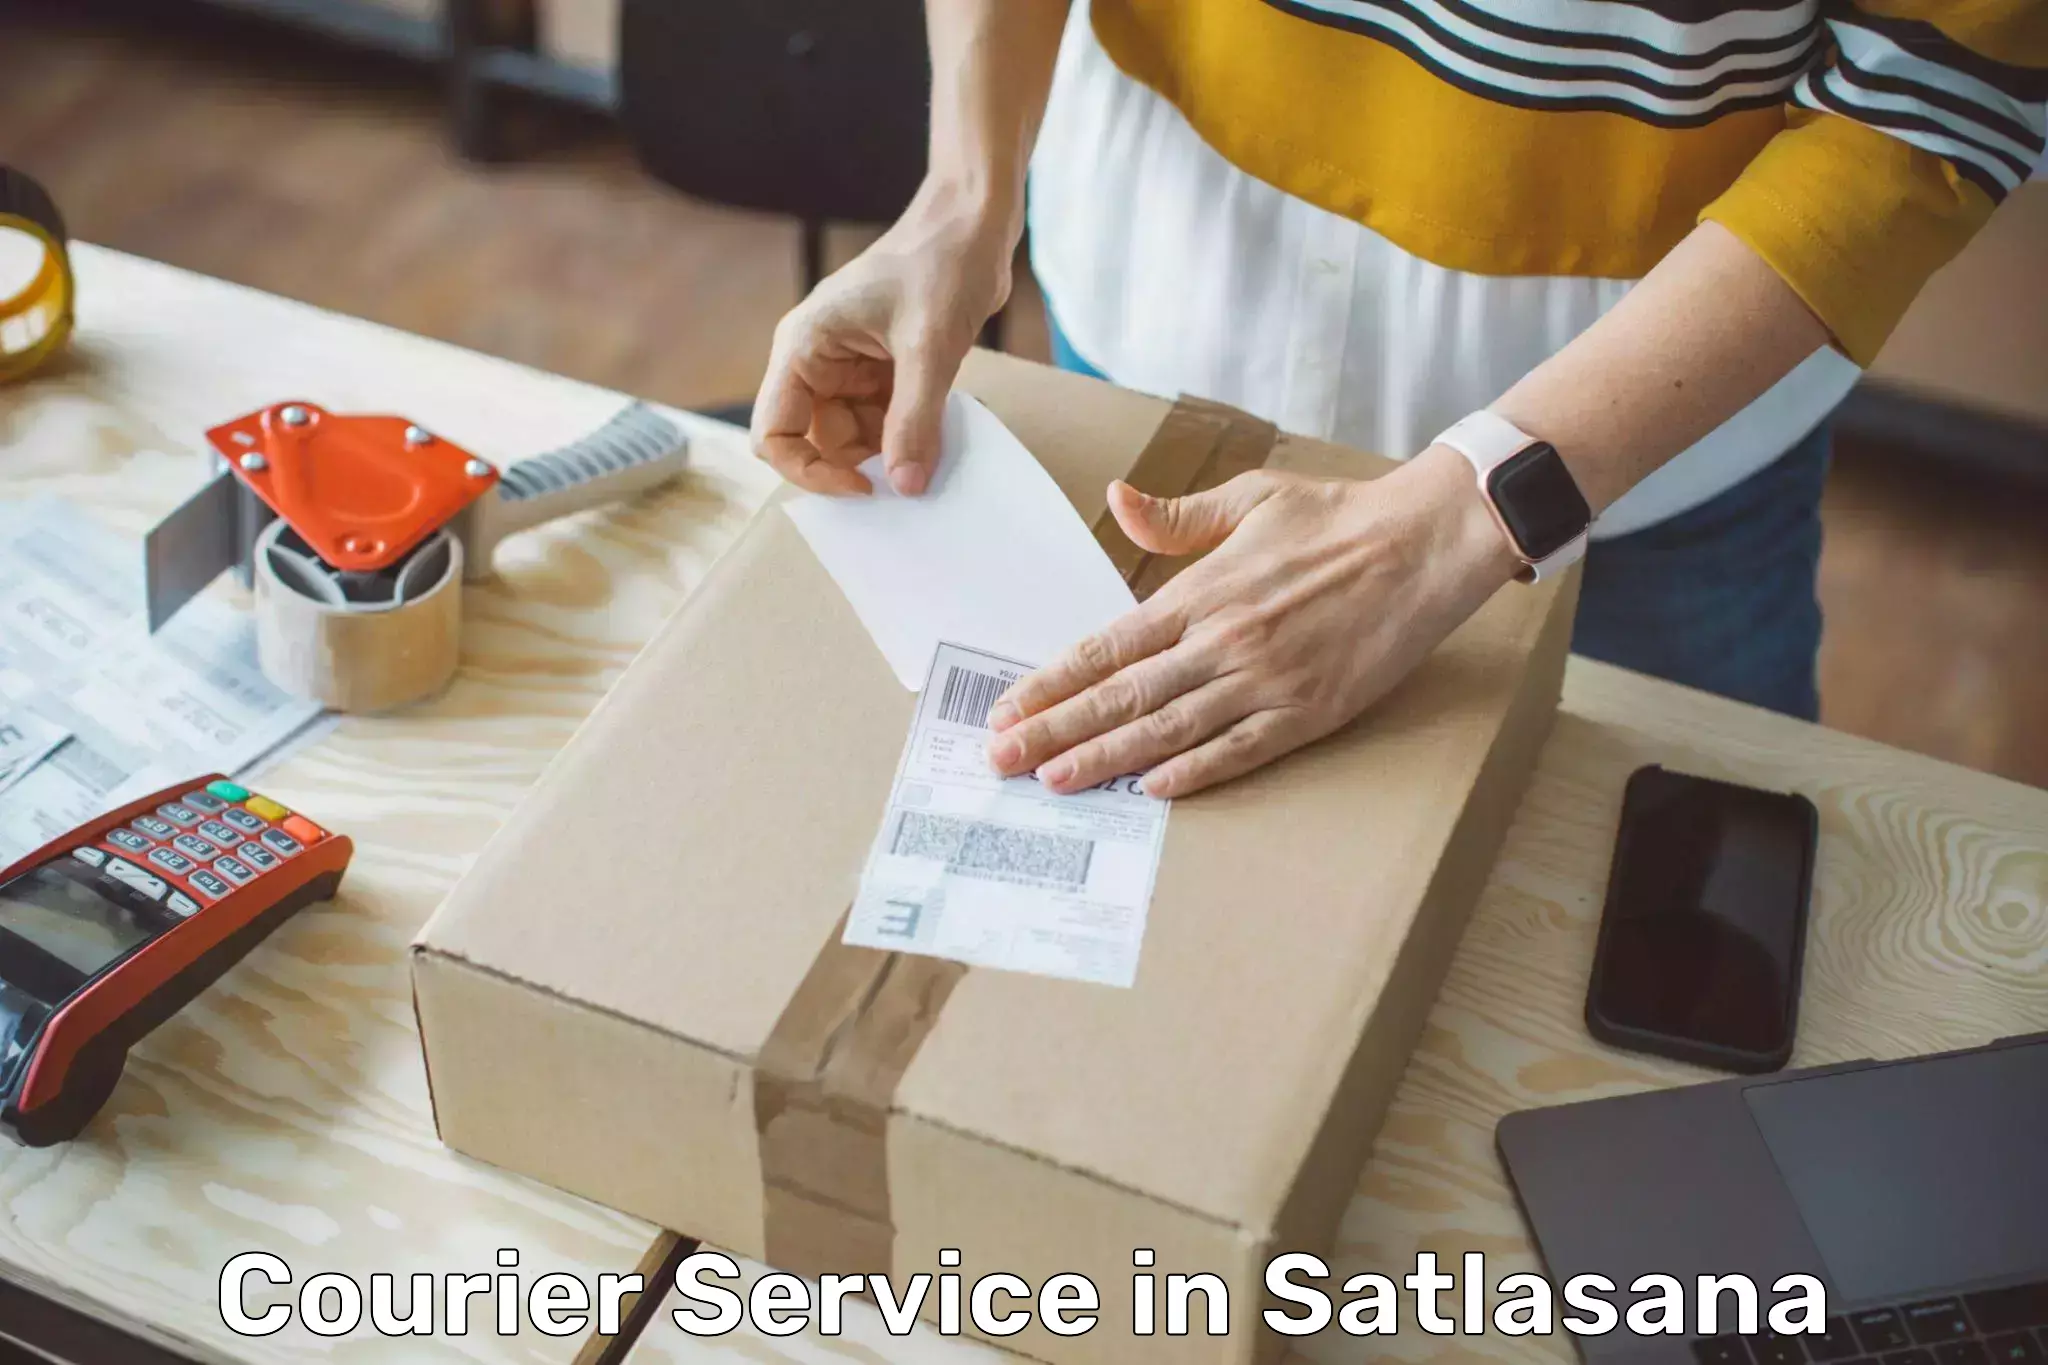 E-commerce shipping in Satlasana